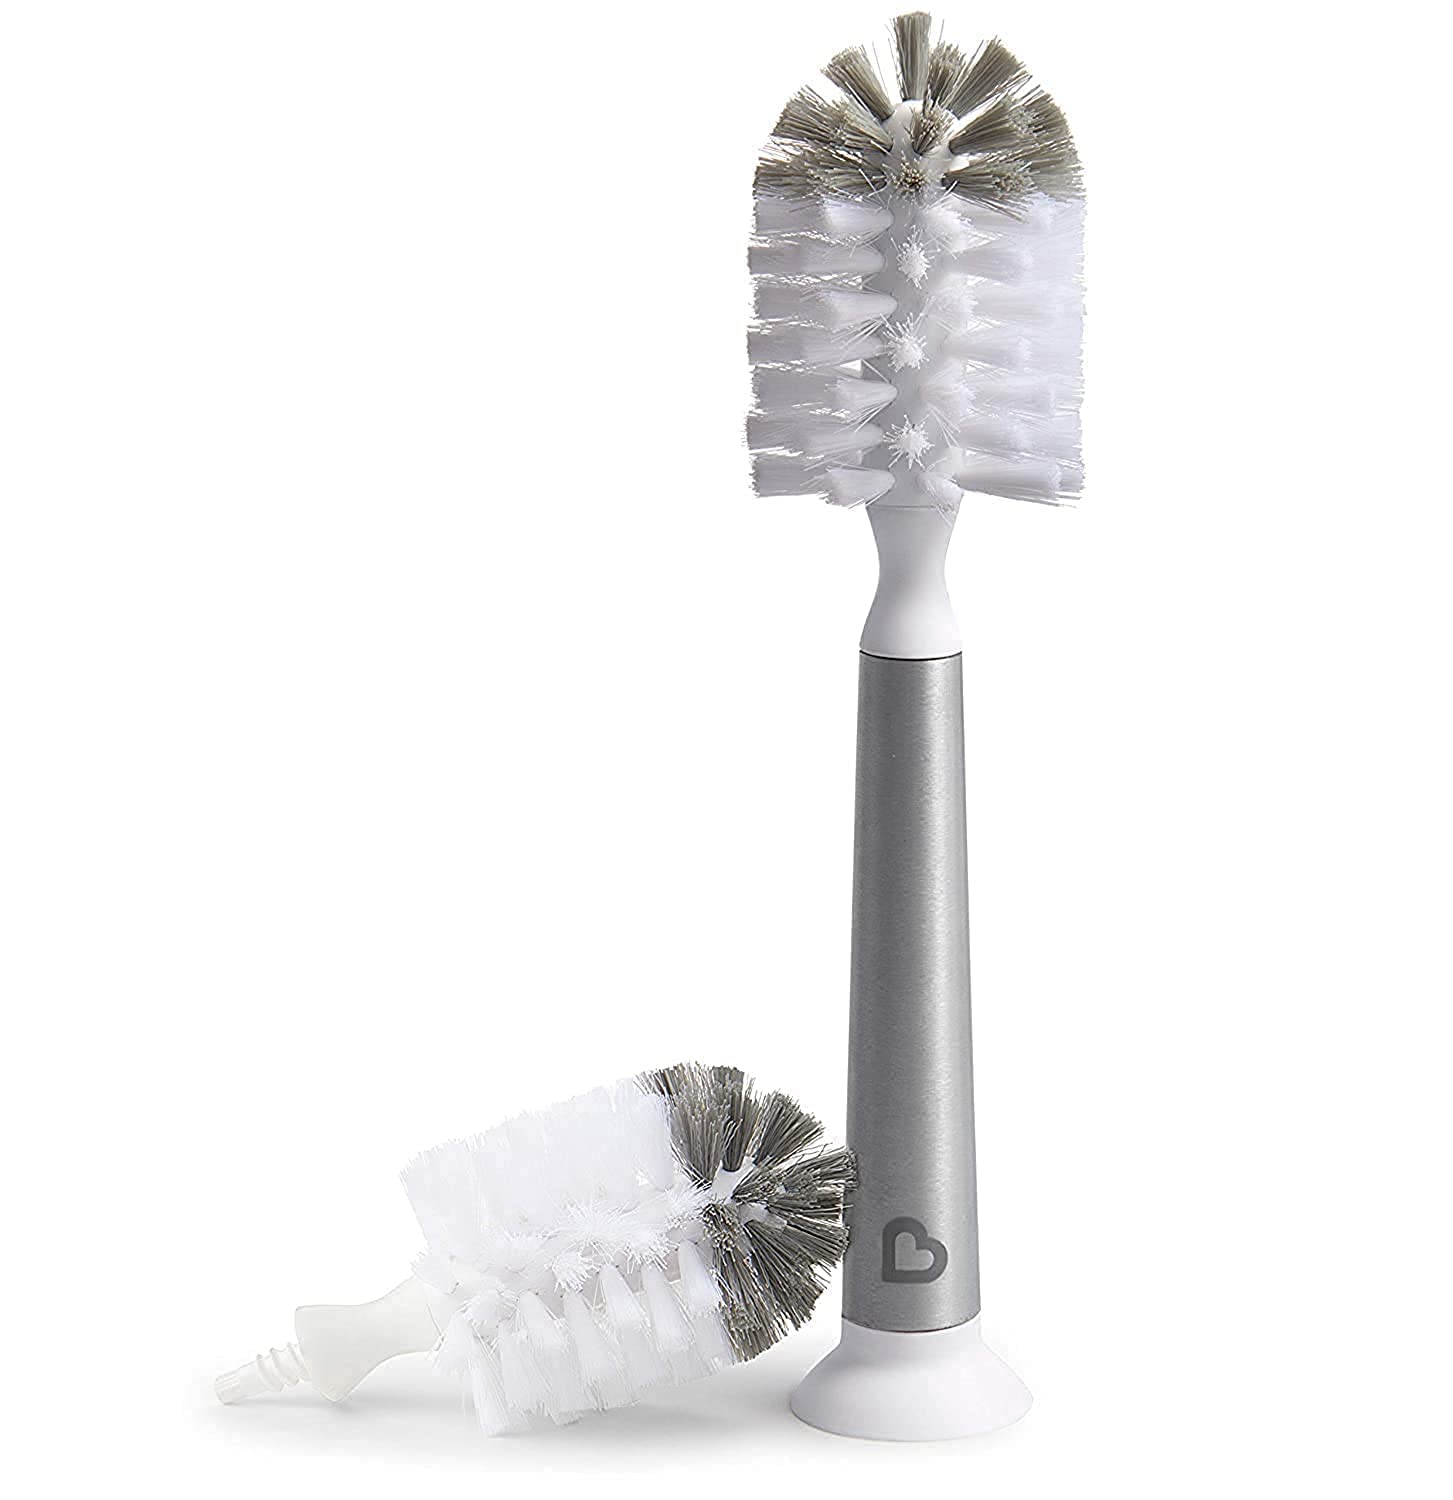 Munchkin® Shine™ Stainless Steel Bottle Brush and Refill Brush Head, Gray - image 1 of 9